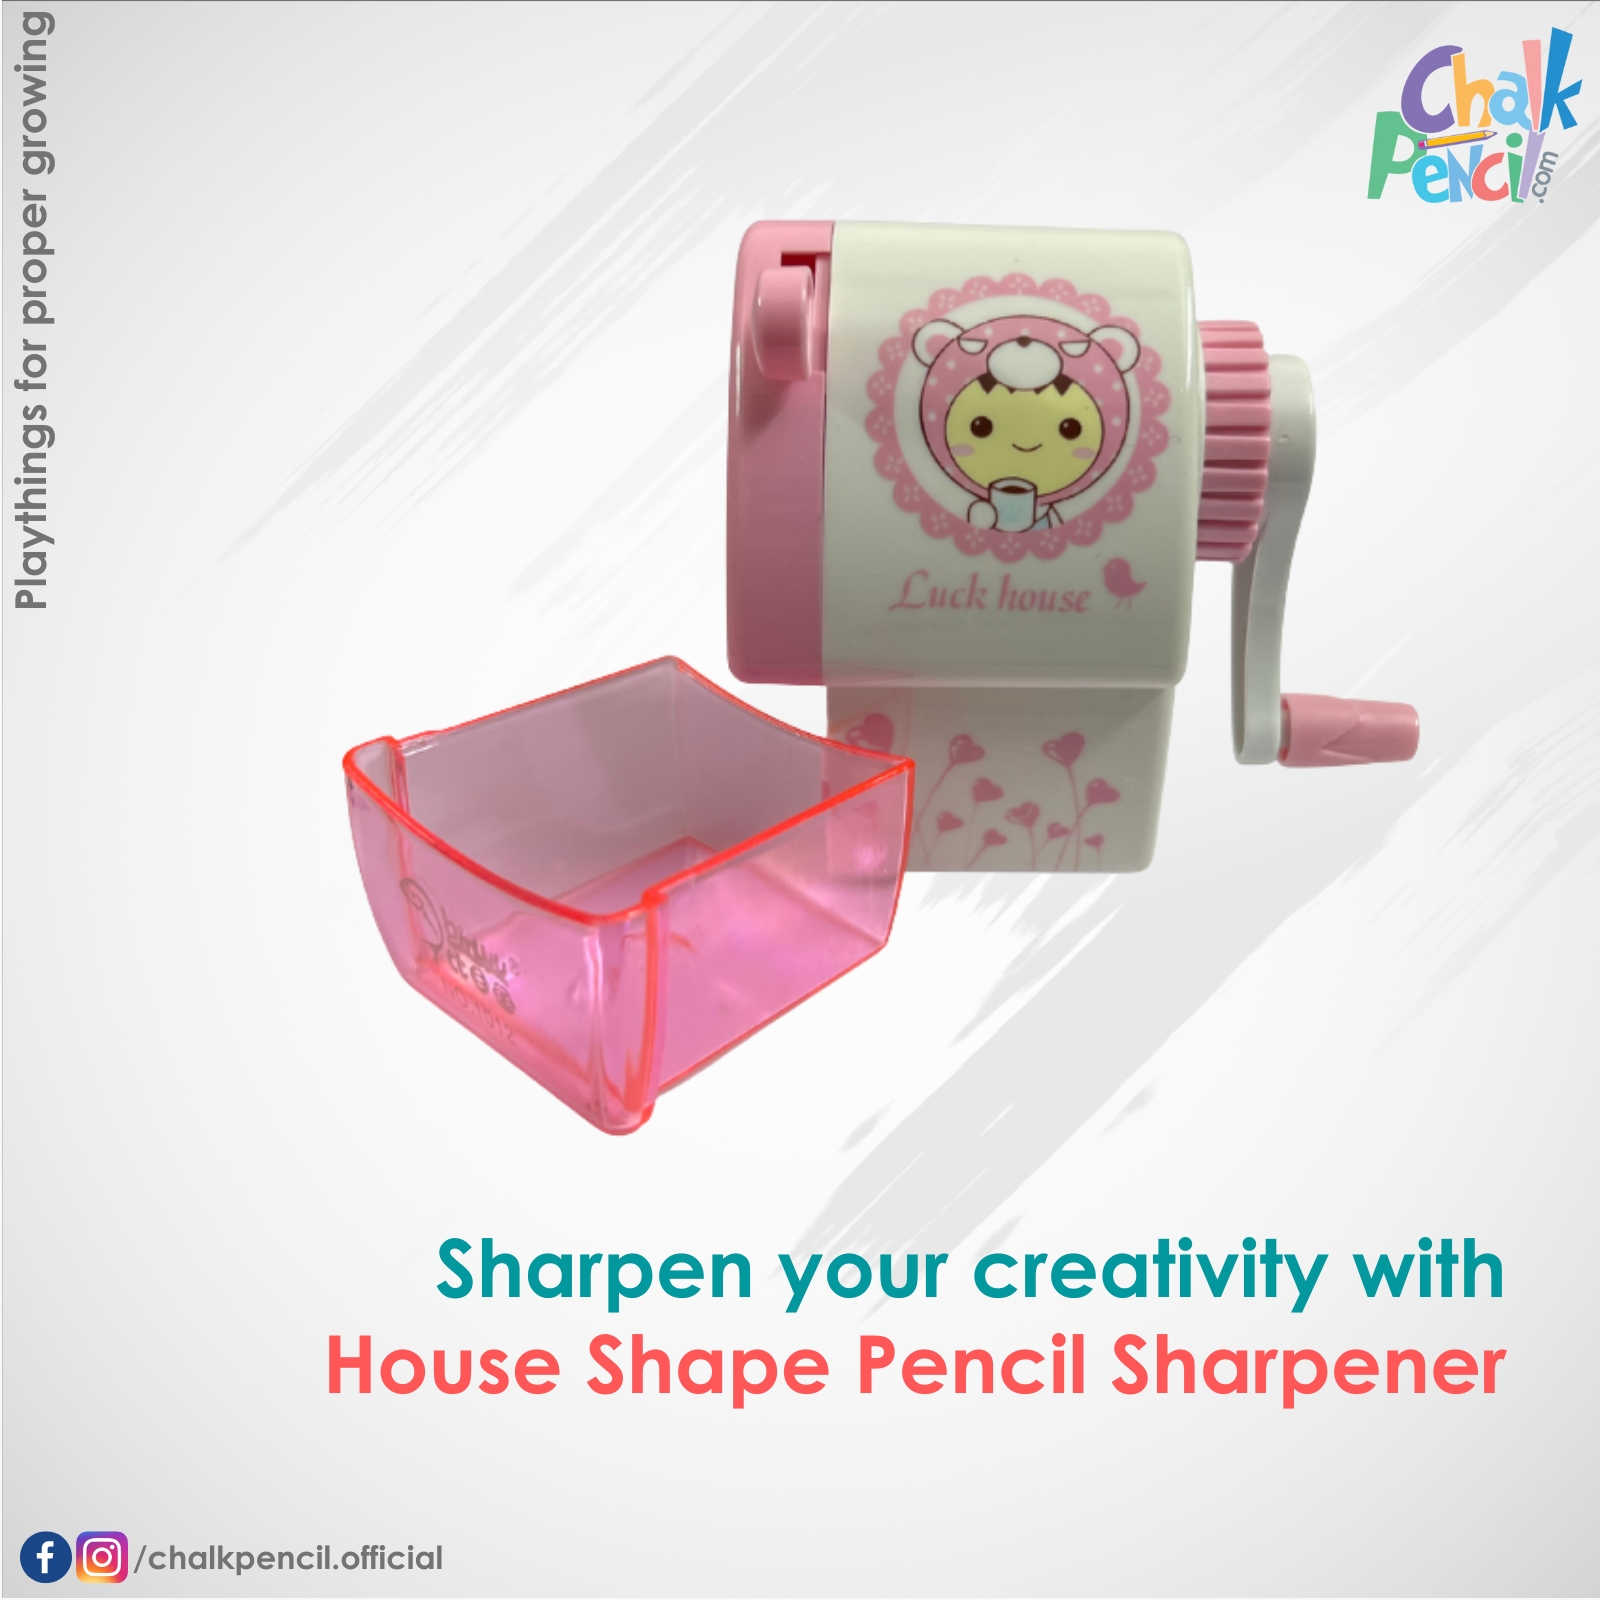 House Shape Pencil Sharpener